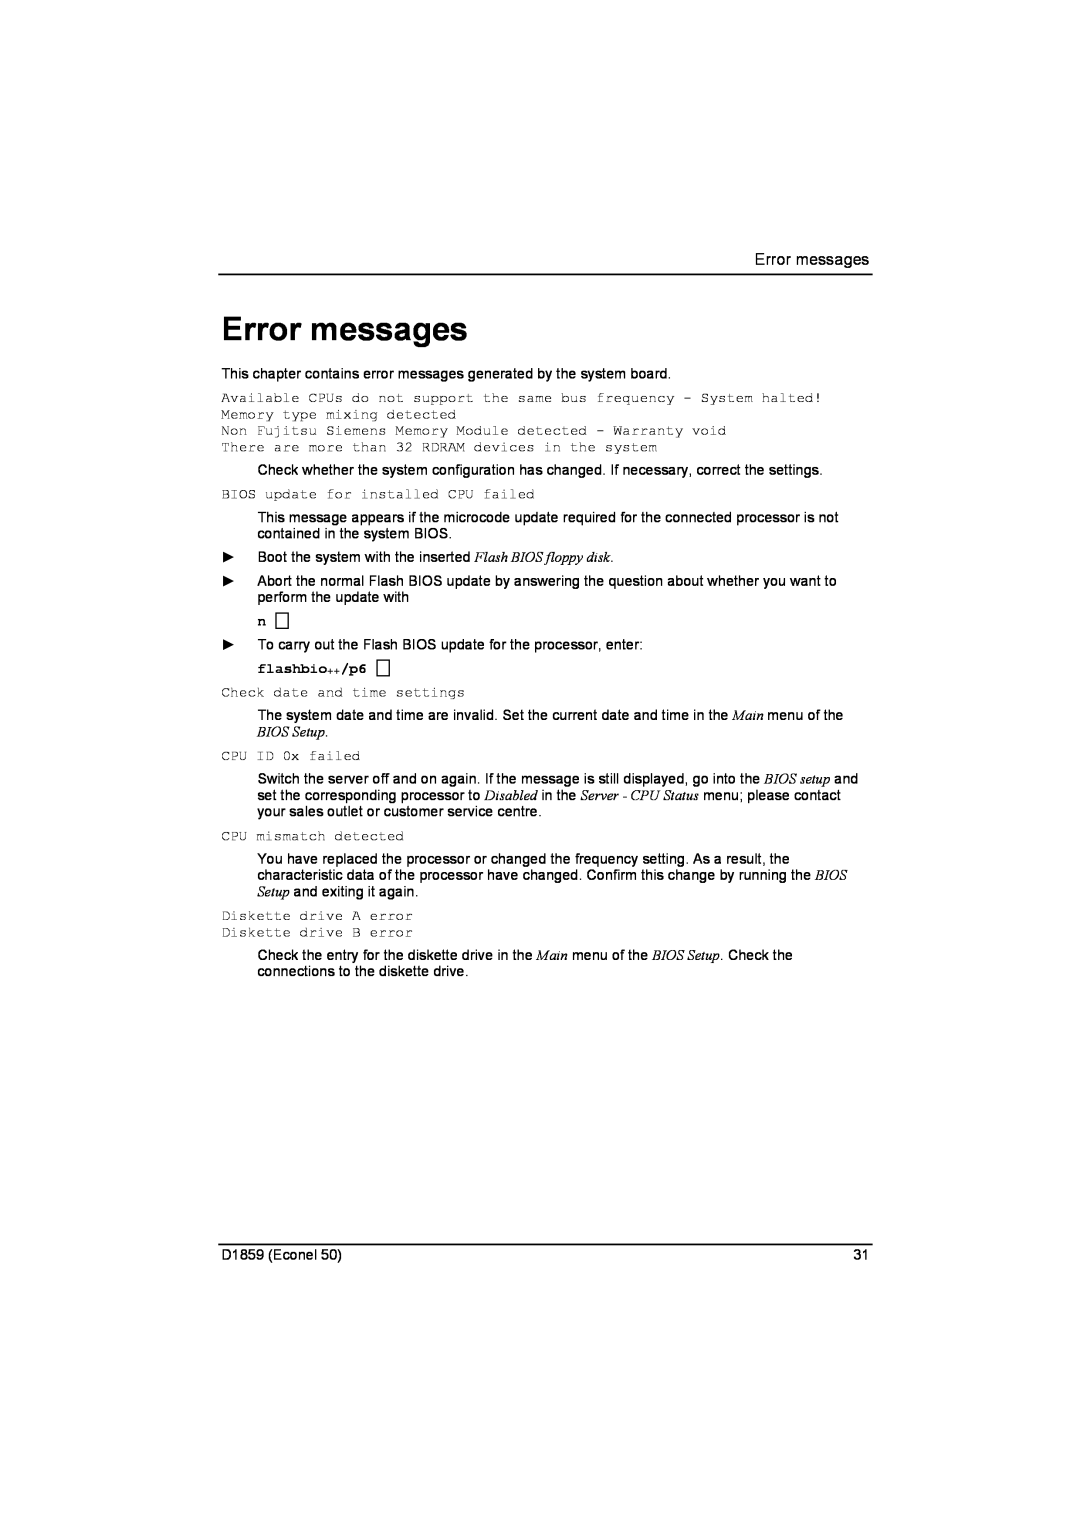 Fujitsu D1859 technical manual Error messages, flashbio++/p6 